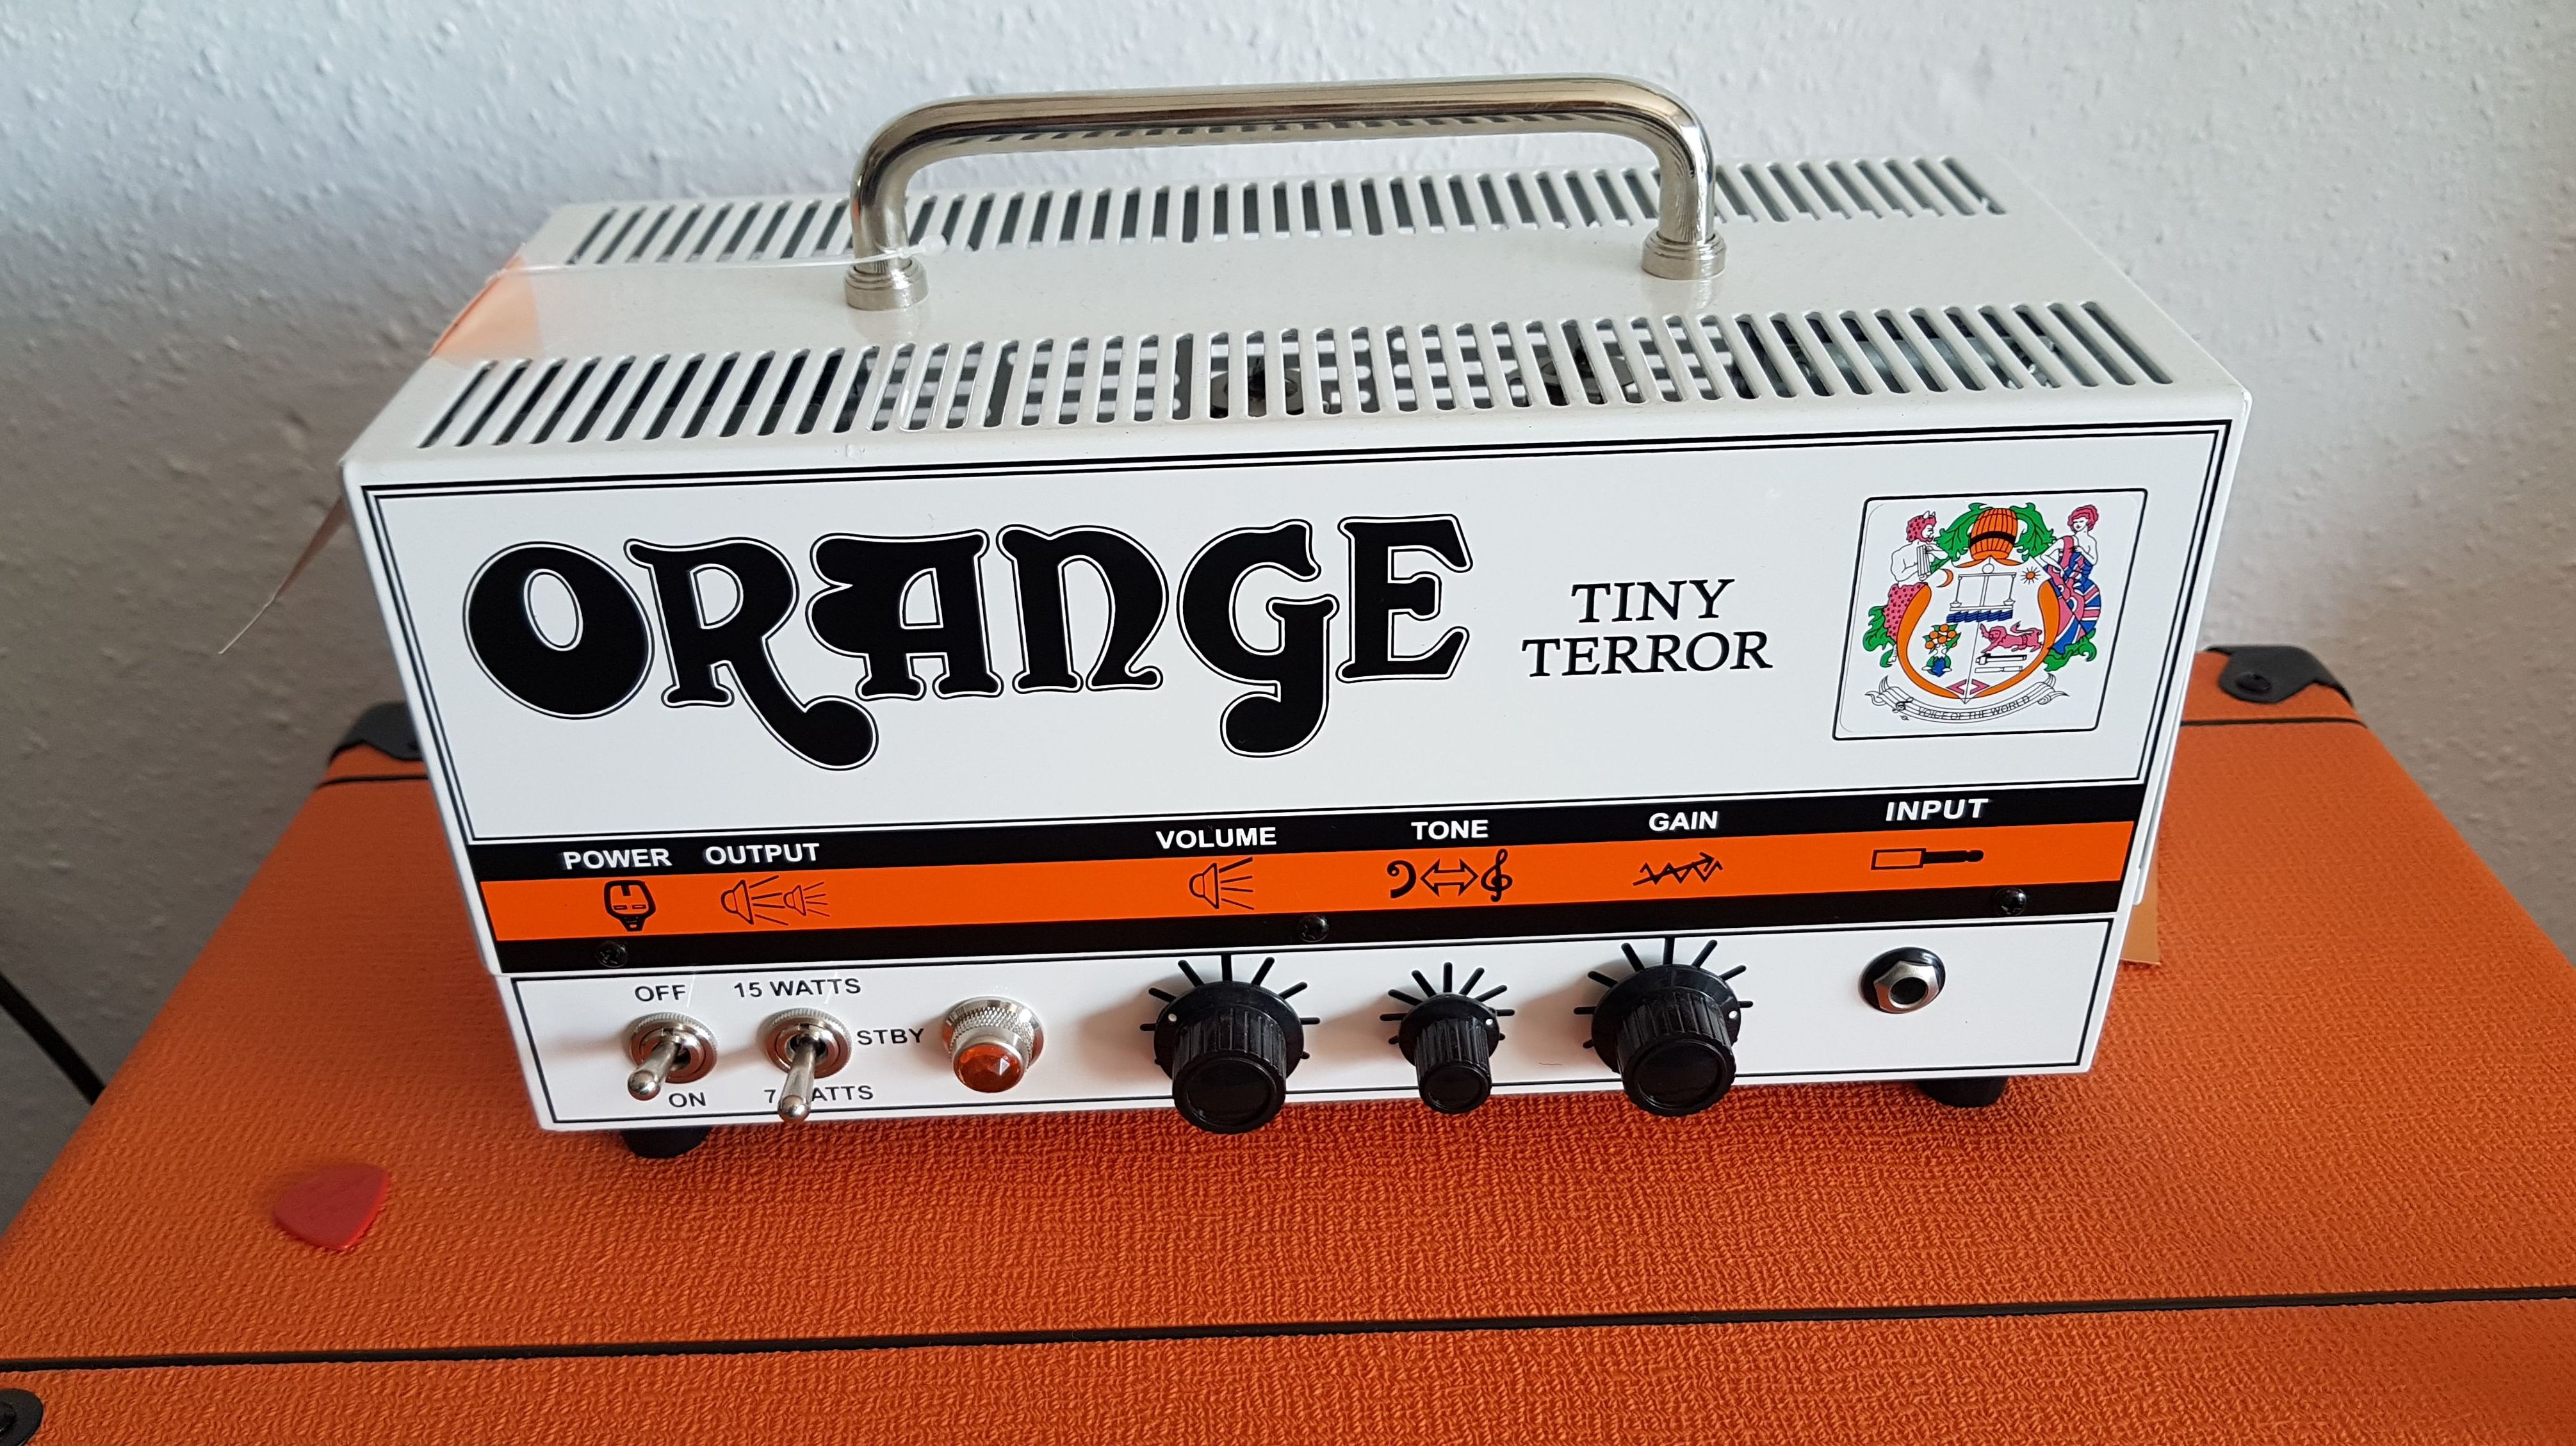 Amplificador a válvulas de guitarra eléctrica Orange Tiny Terror con Pantalla PPC112 oferta